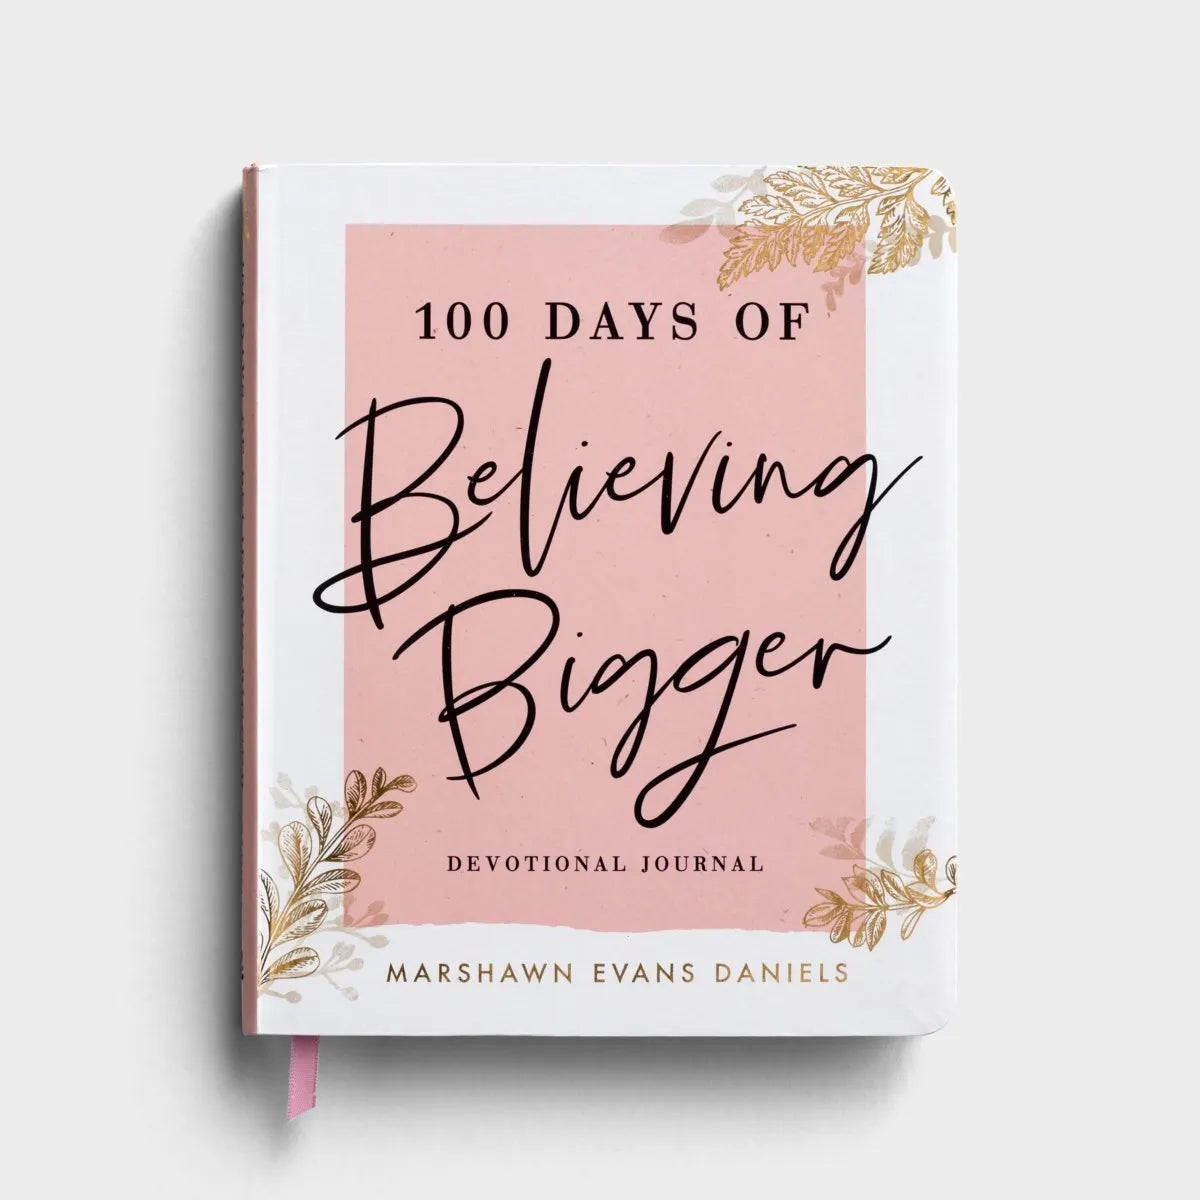 Marshawn Evans Daniels - 100 Days of Believing Bigger - Devotional Journal and Prayers